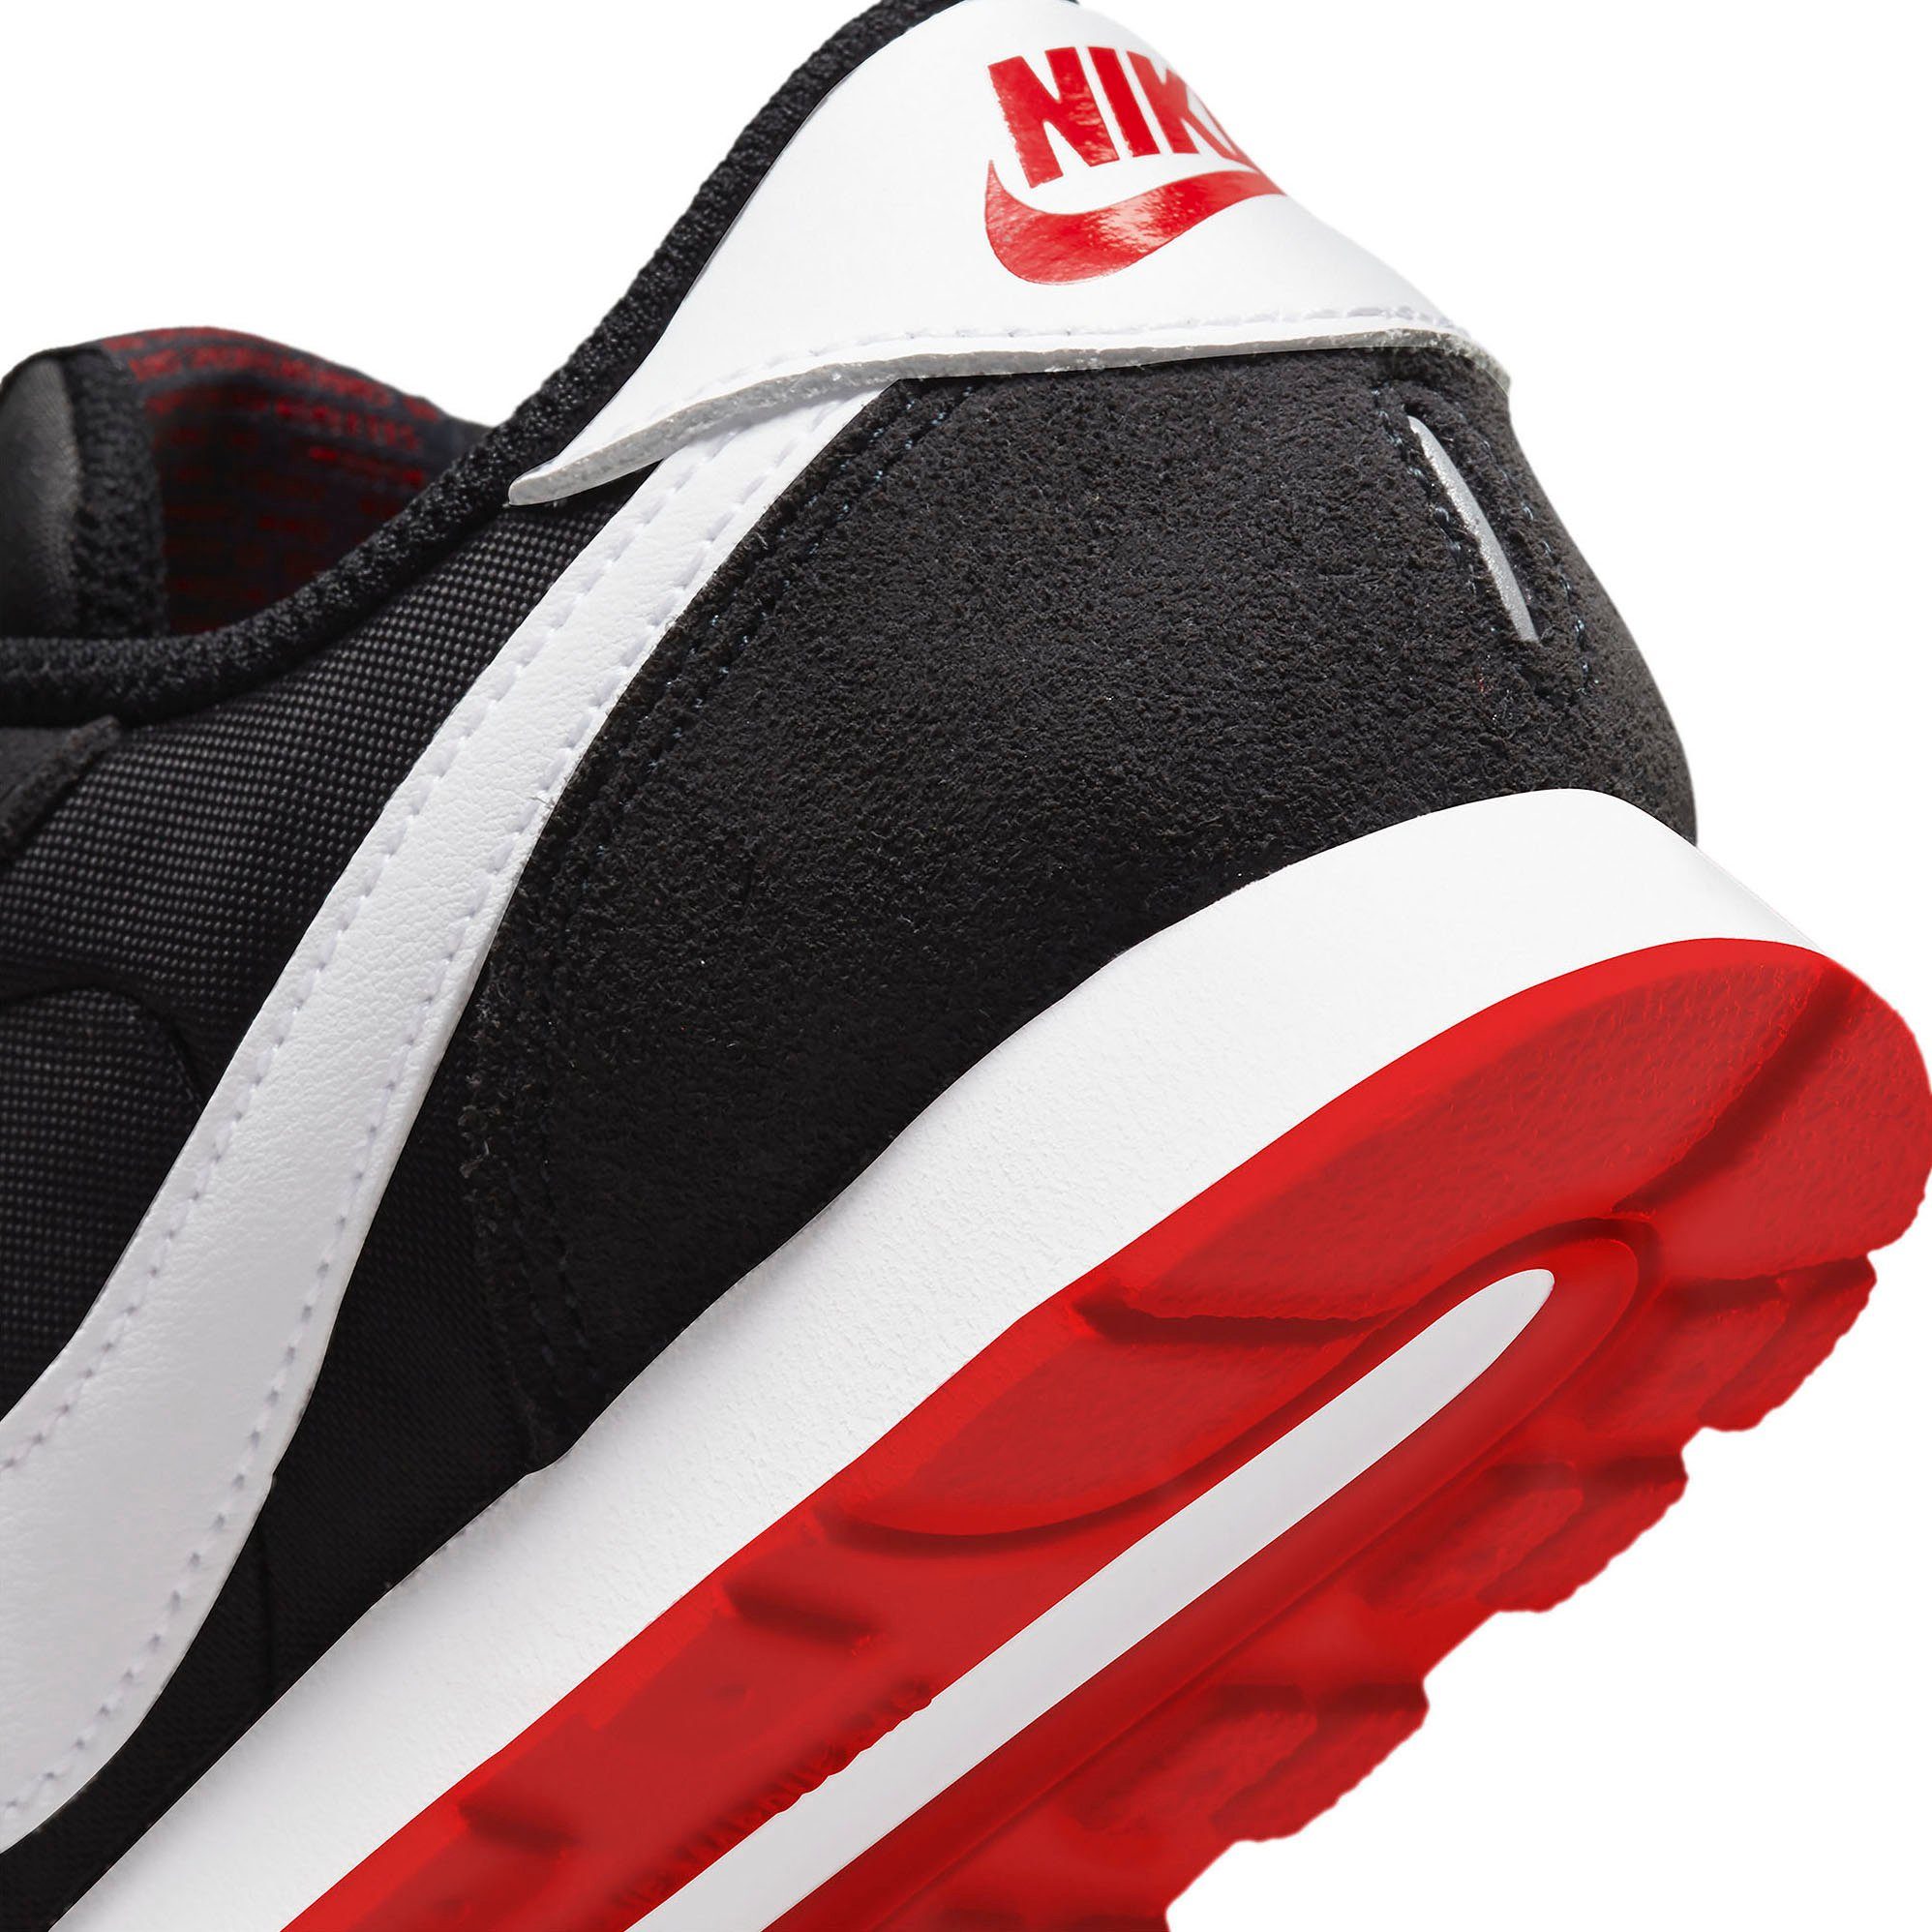 VALIANT mit schwarz-weiß (PS) Klettverschluss Sneaker Sportswear MD Nike